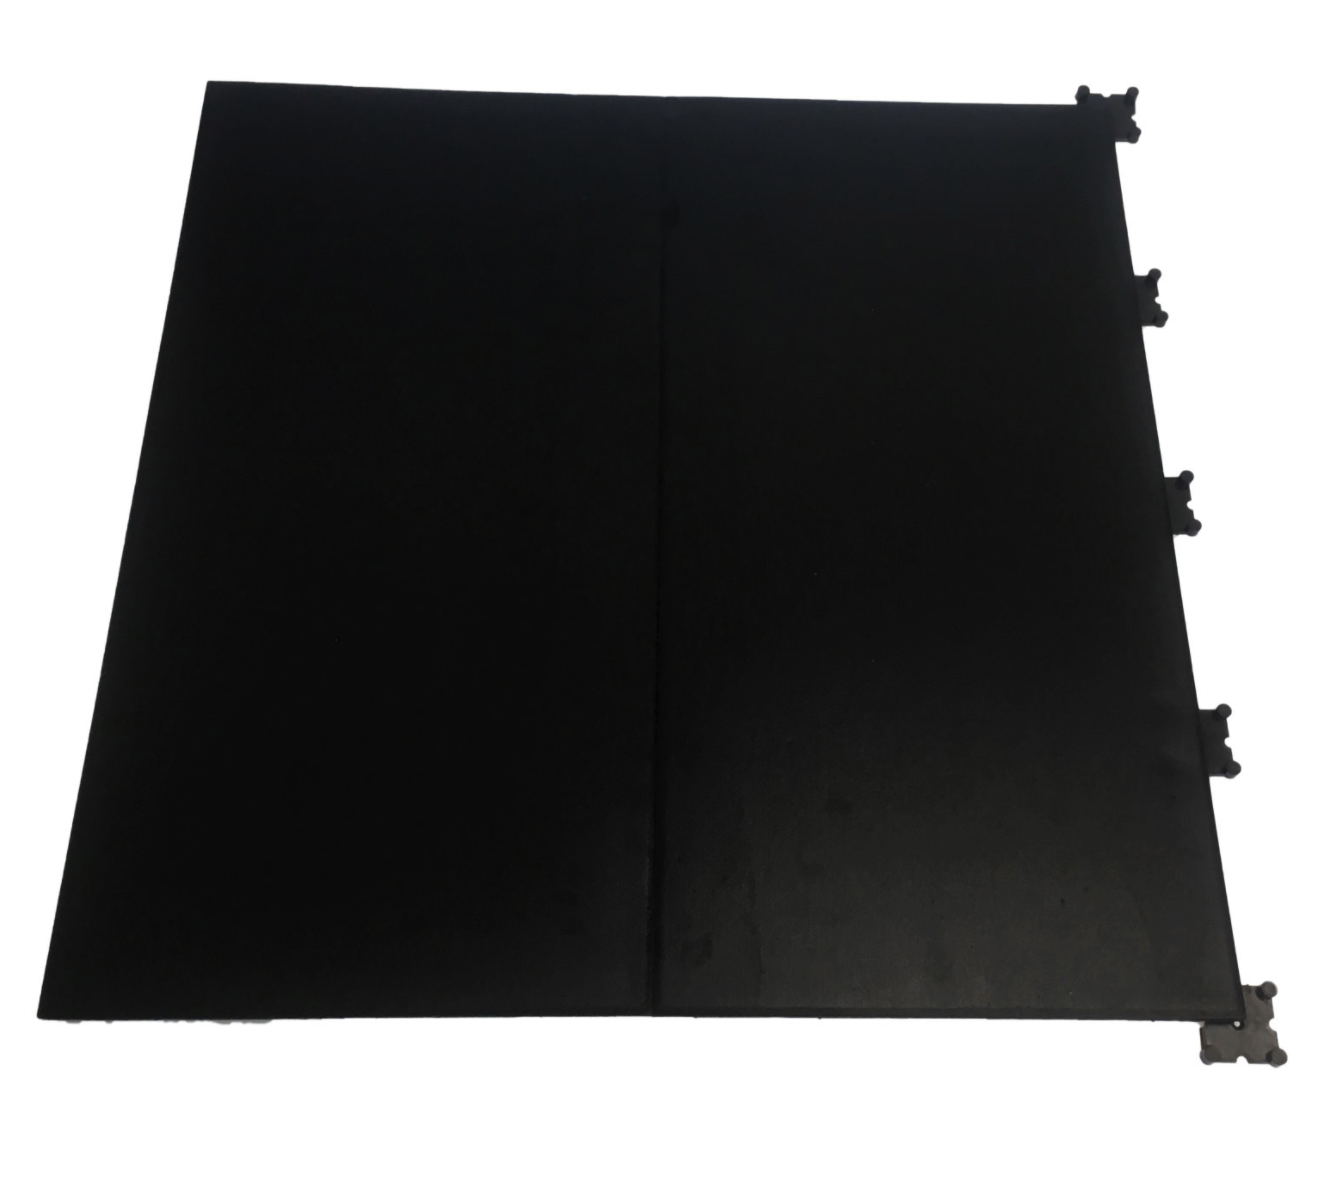 Primal Pro Series Rubber Gym Tile Matting – Black EPDM 1m x 0.5m x 20mm